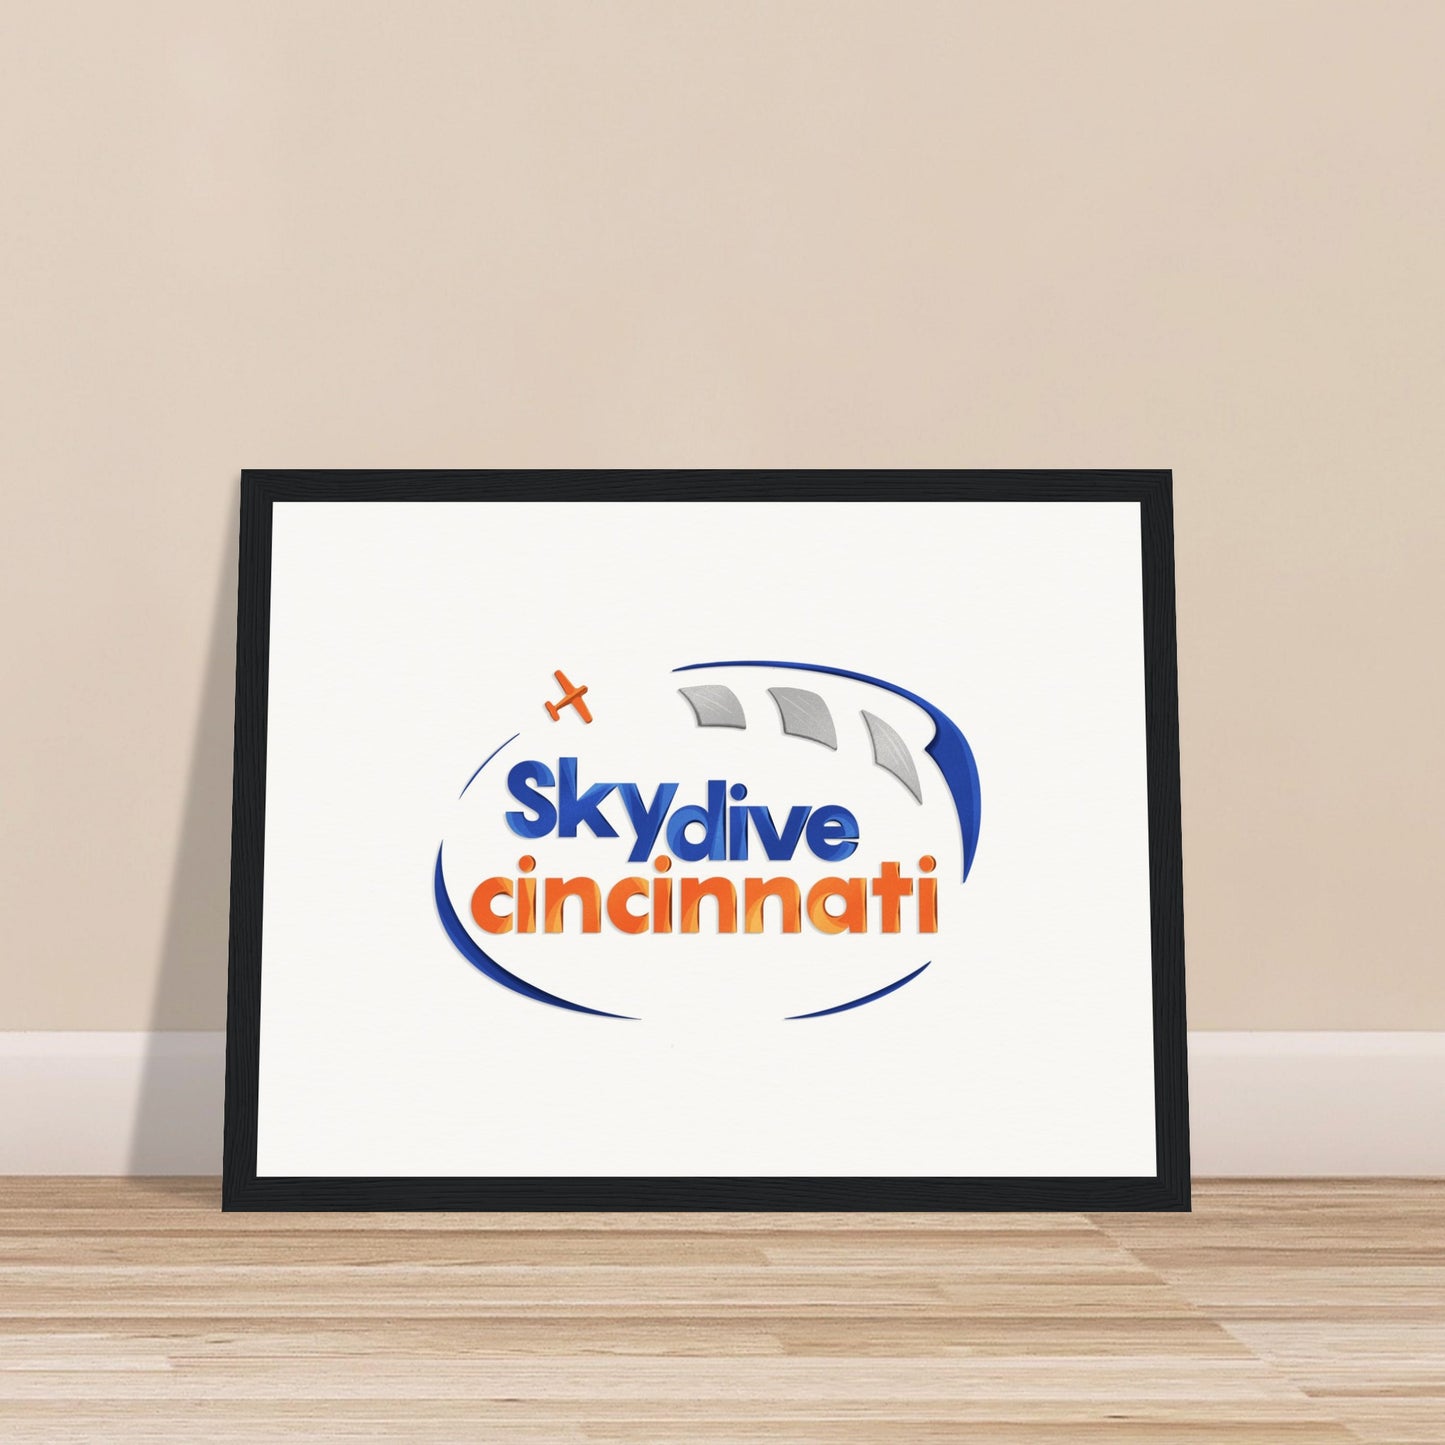 Skydive Cincinnati - Museum-Quality Matte Paper Wooden Framed Poster